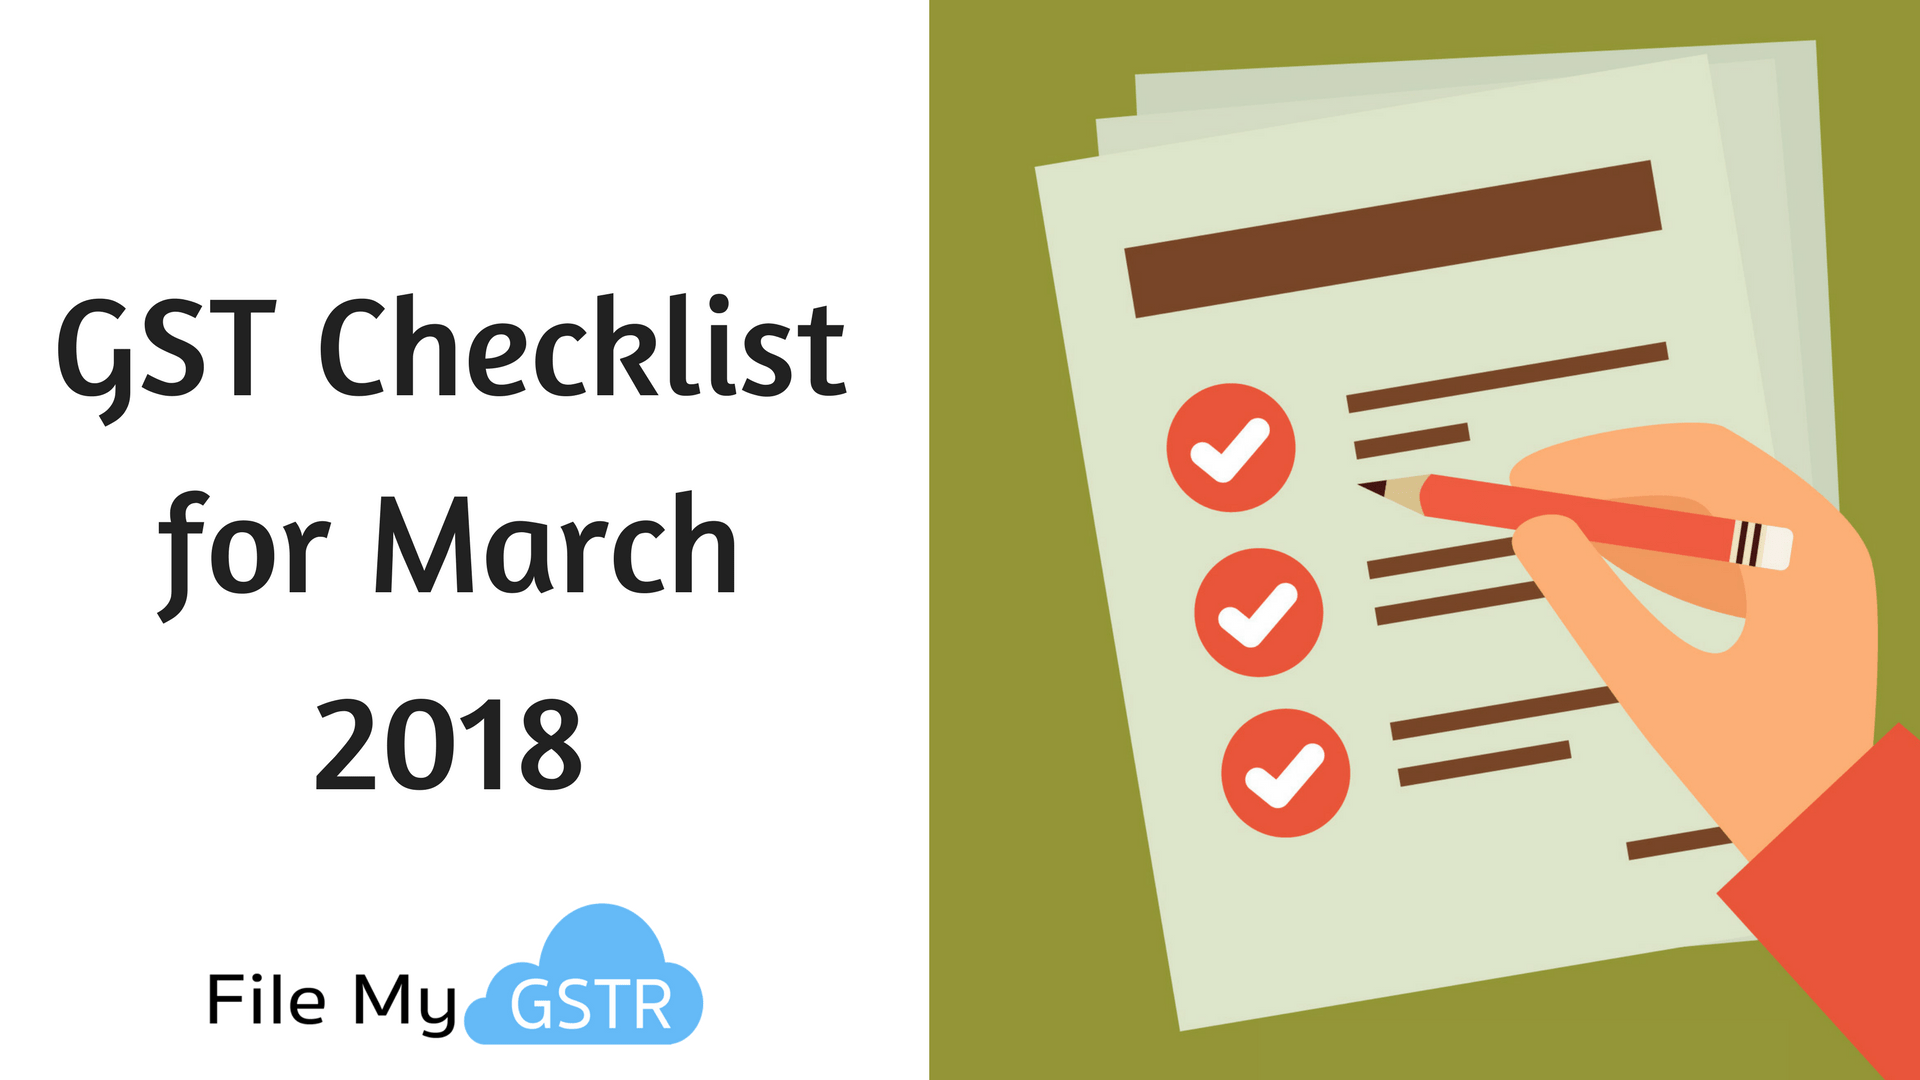 GST Checklist for March 2018